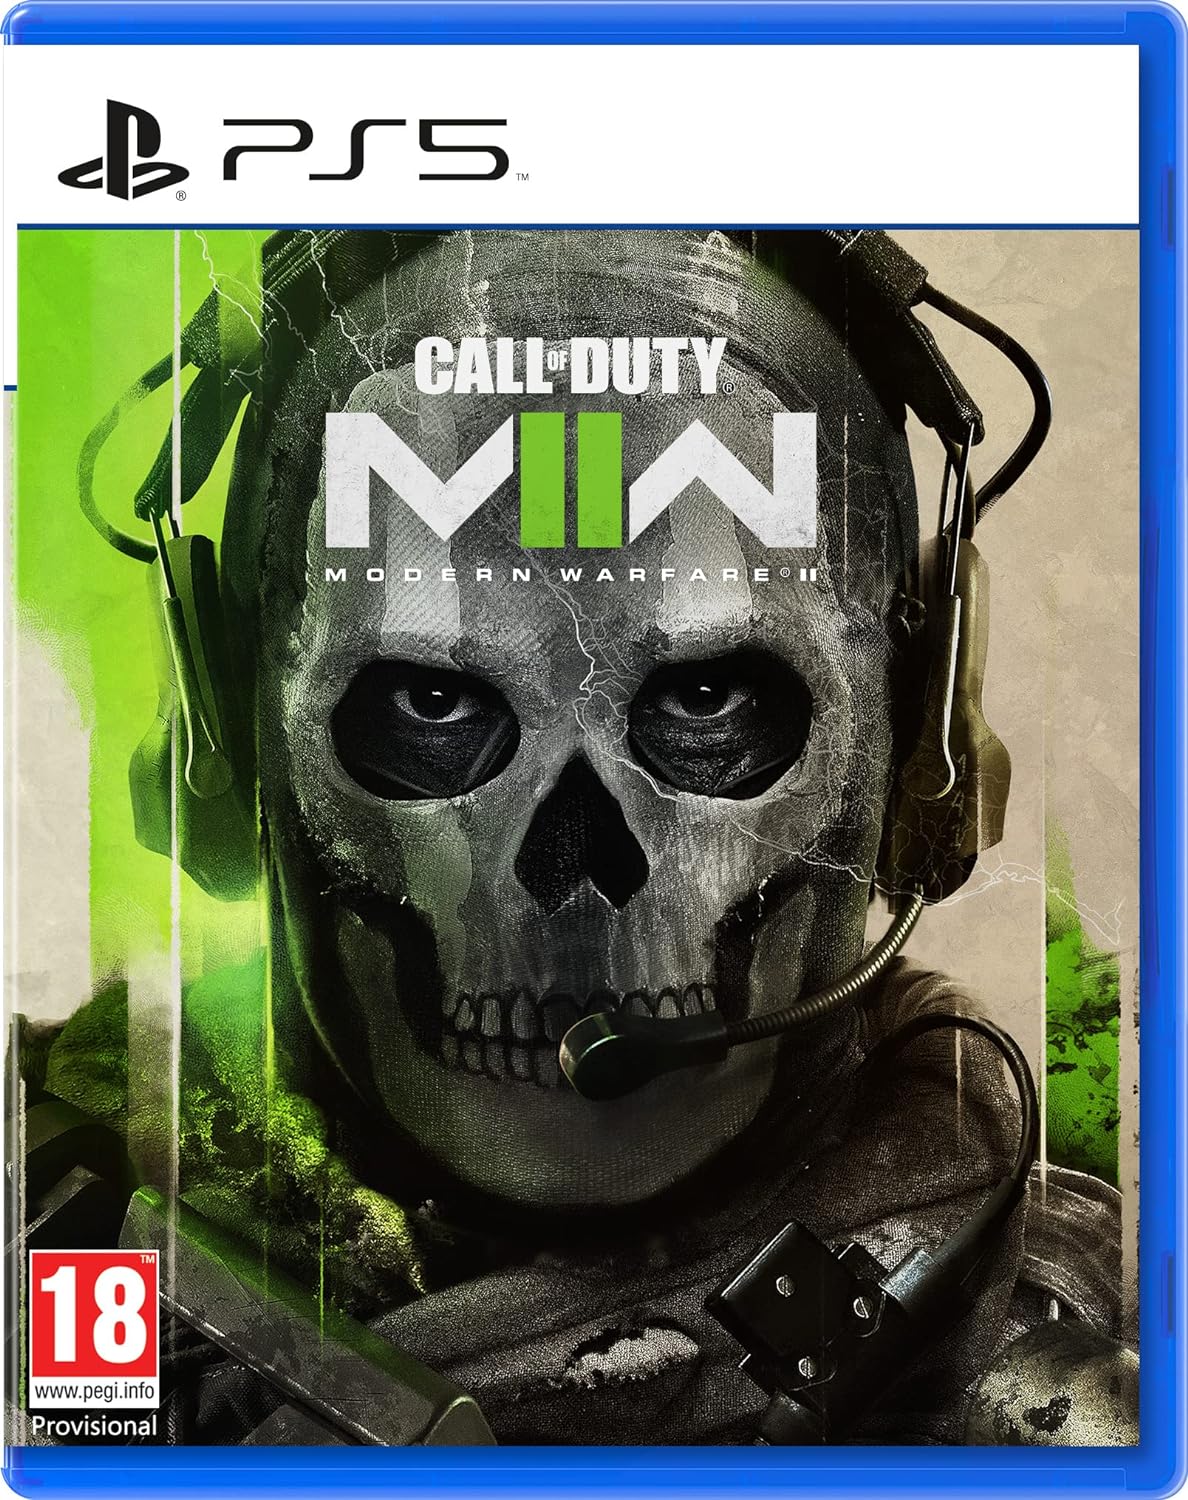 Playstation 5 - Call of Duty: Modern Warfare 2 Remastered